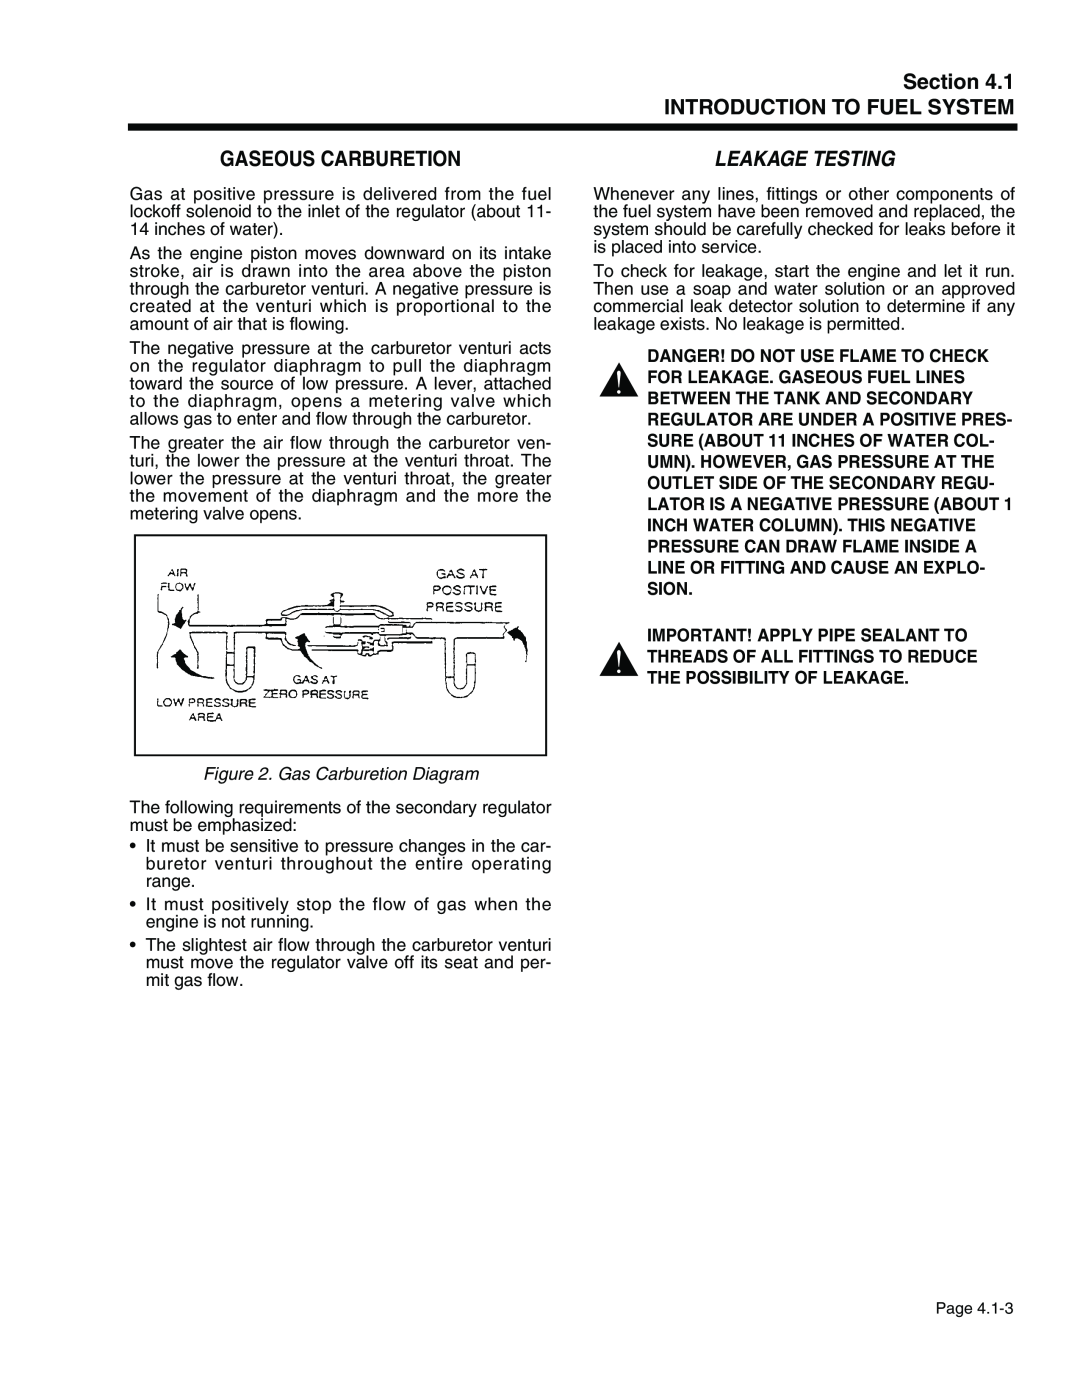 Generac Power Systems 941-2, 940-2 service manual Gaseous Carburetion, Leakage Testing, Gas Carburetion Diagram 